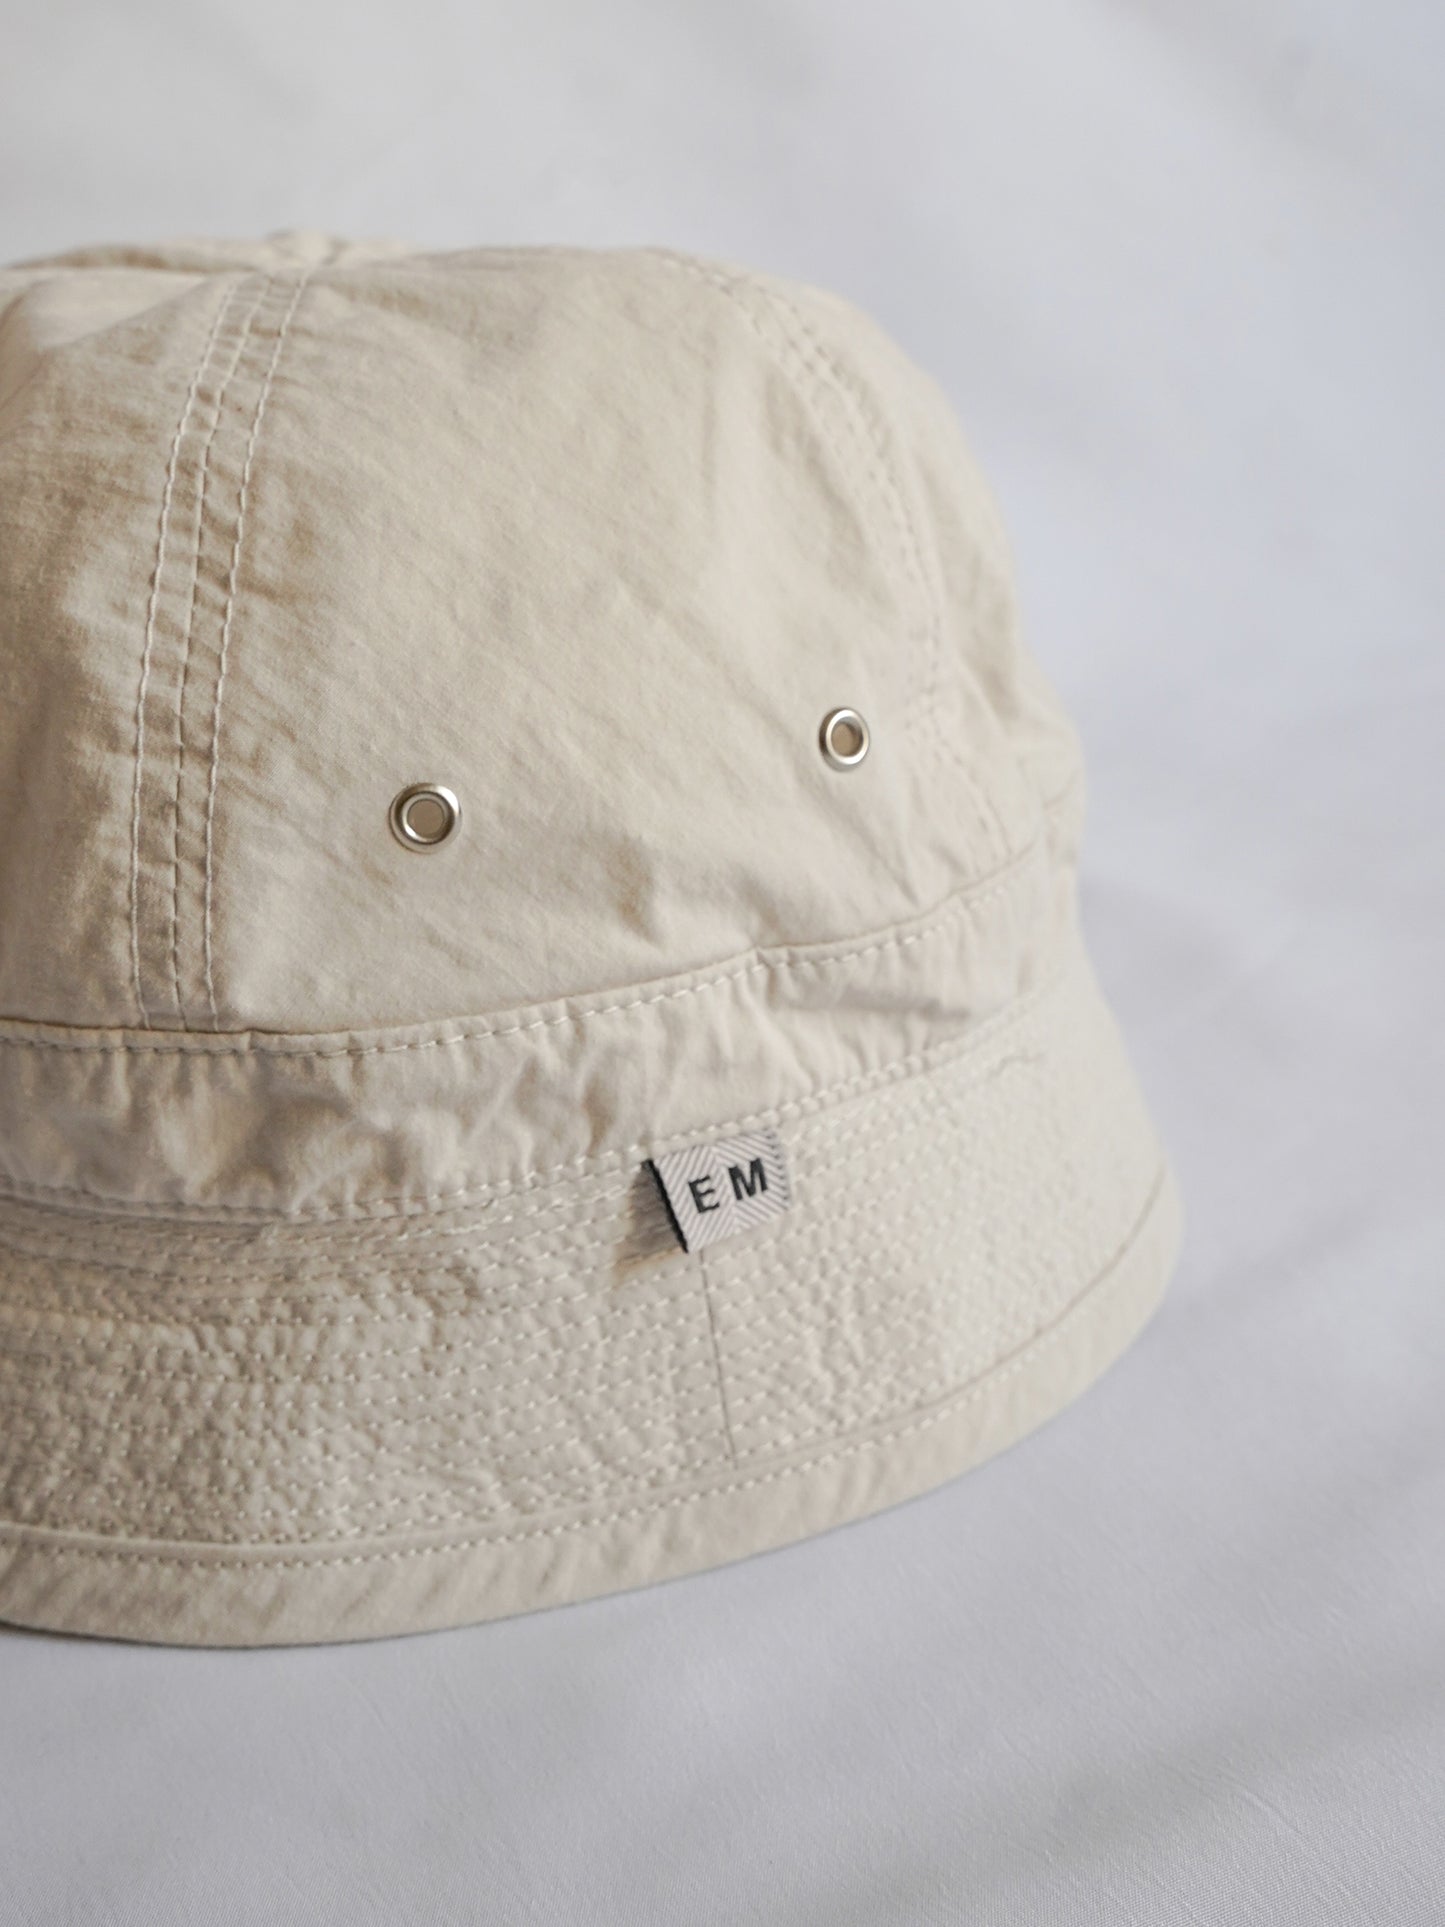 Army Hat (CH Limited)